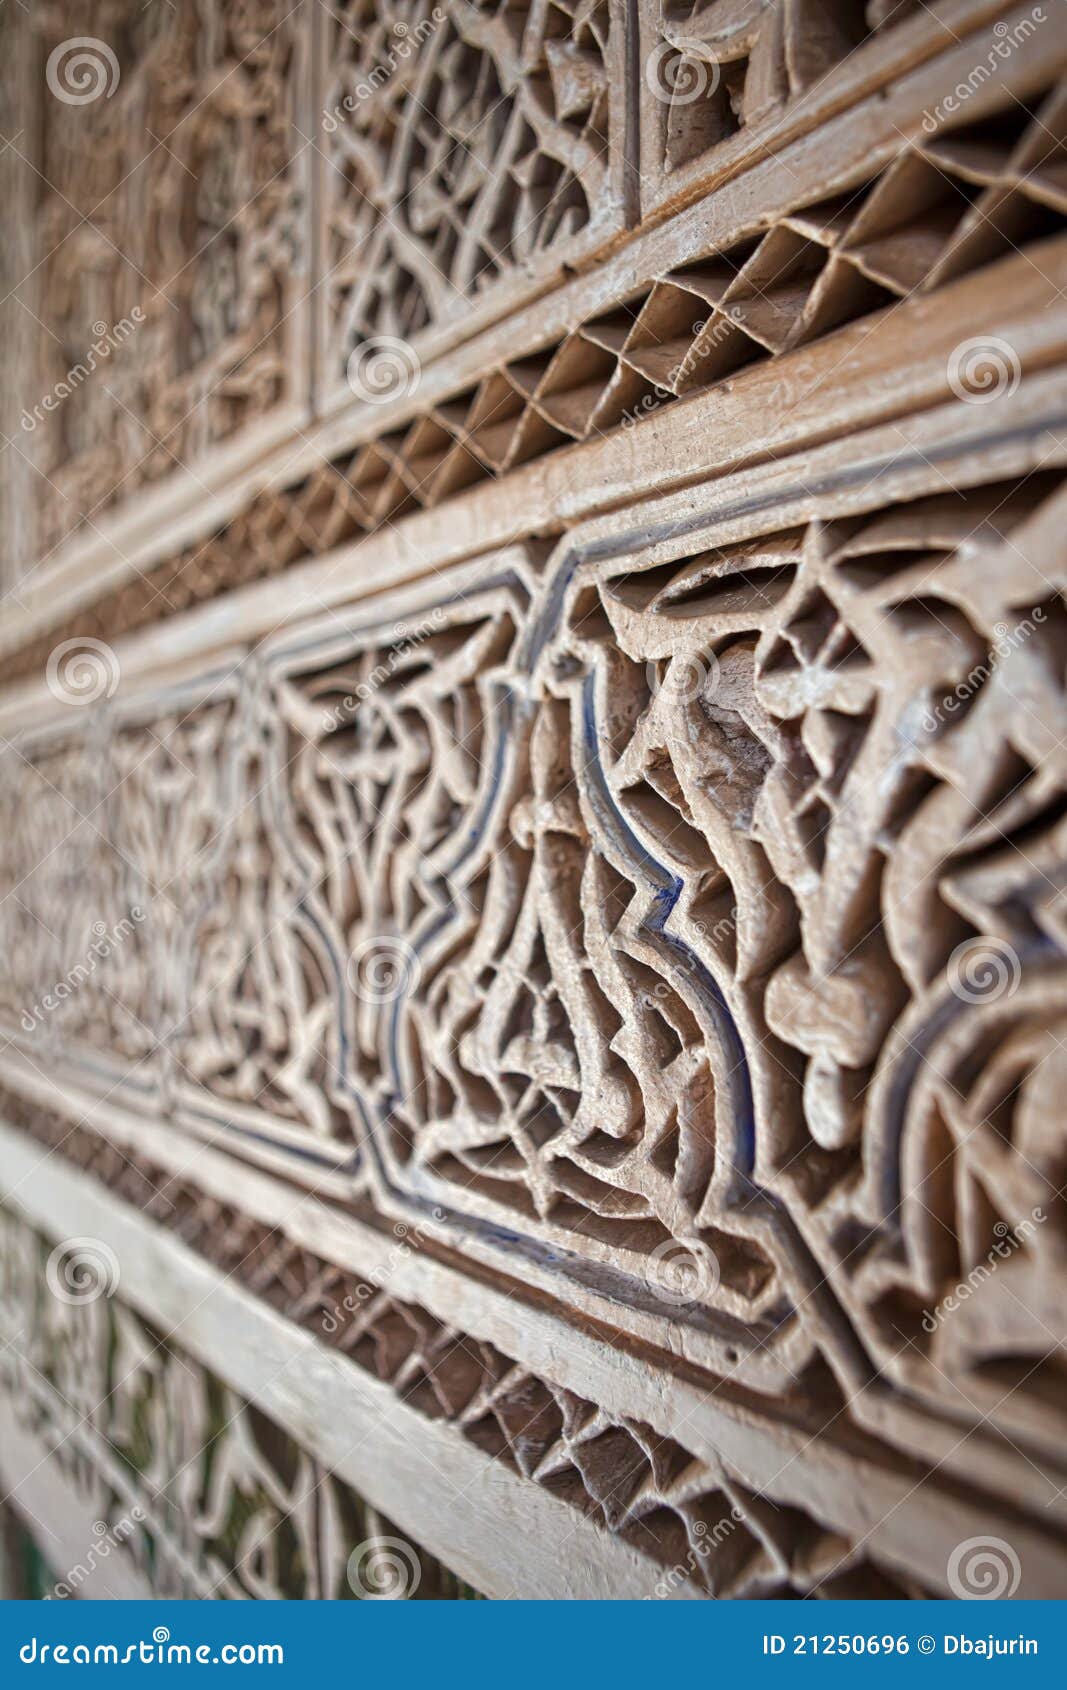 stucco and stonework, morocco